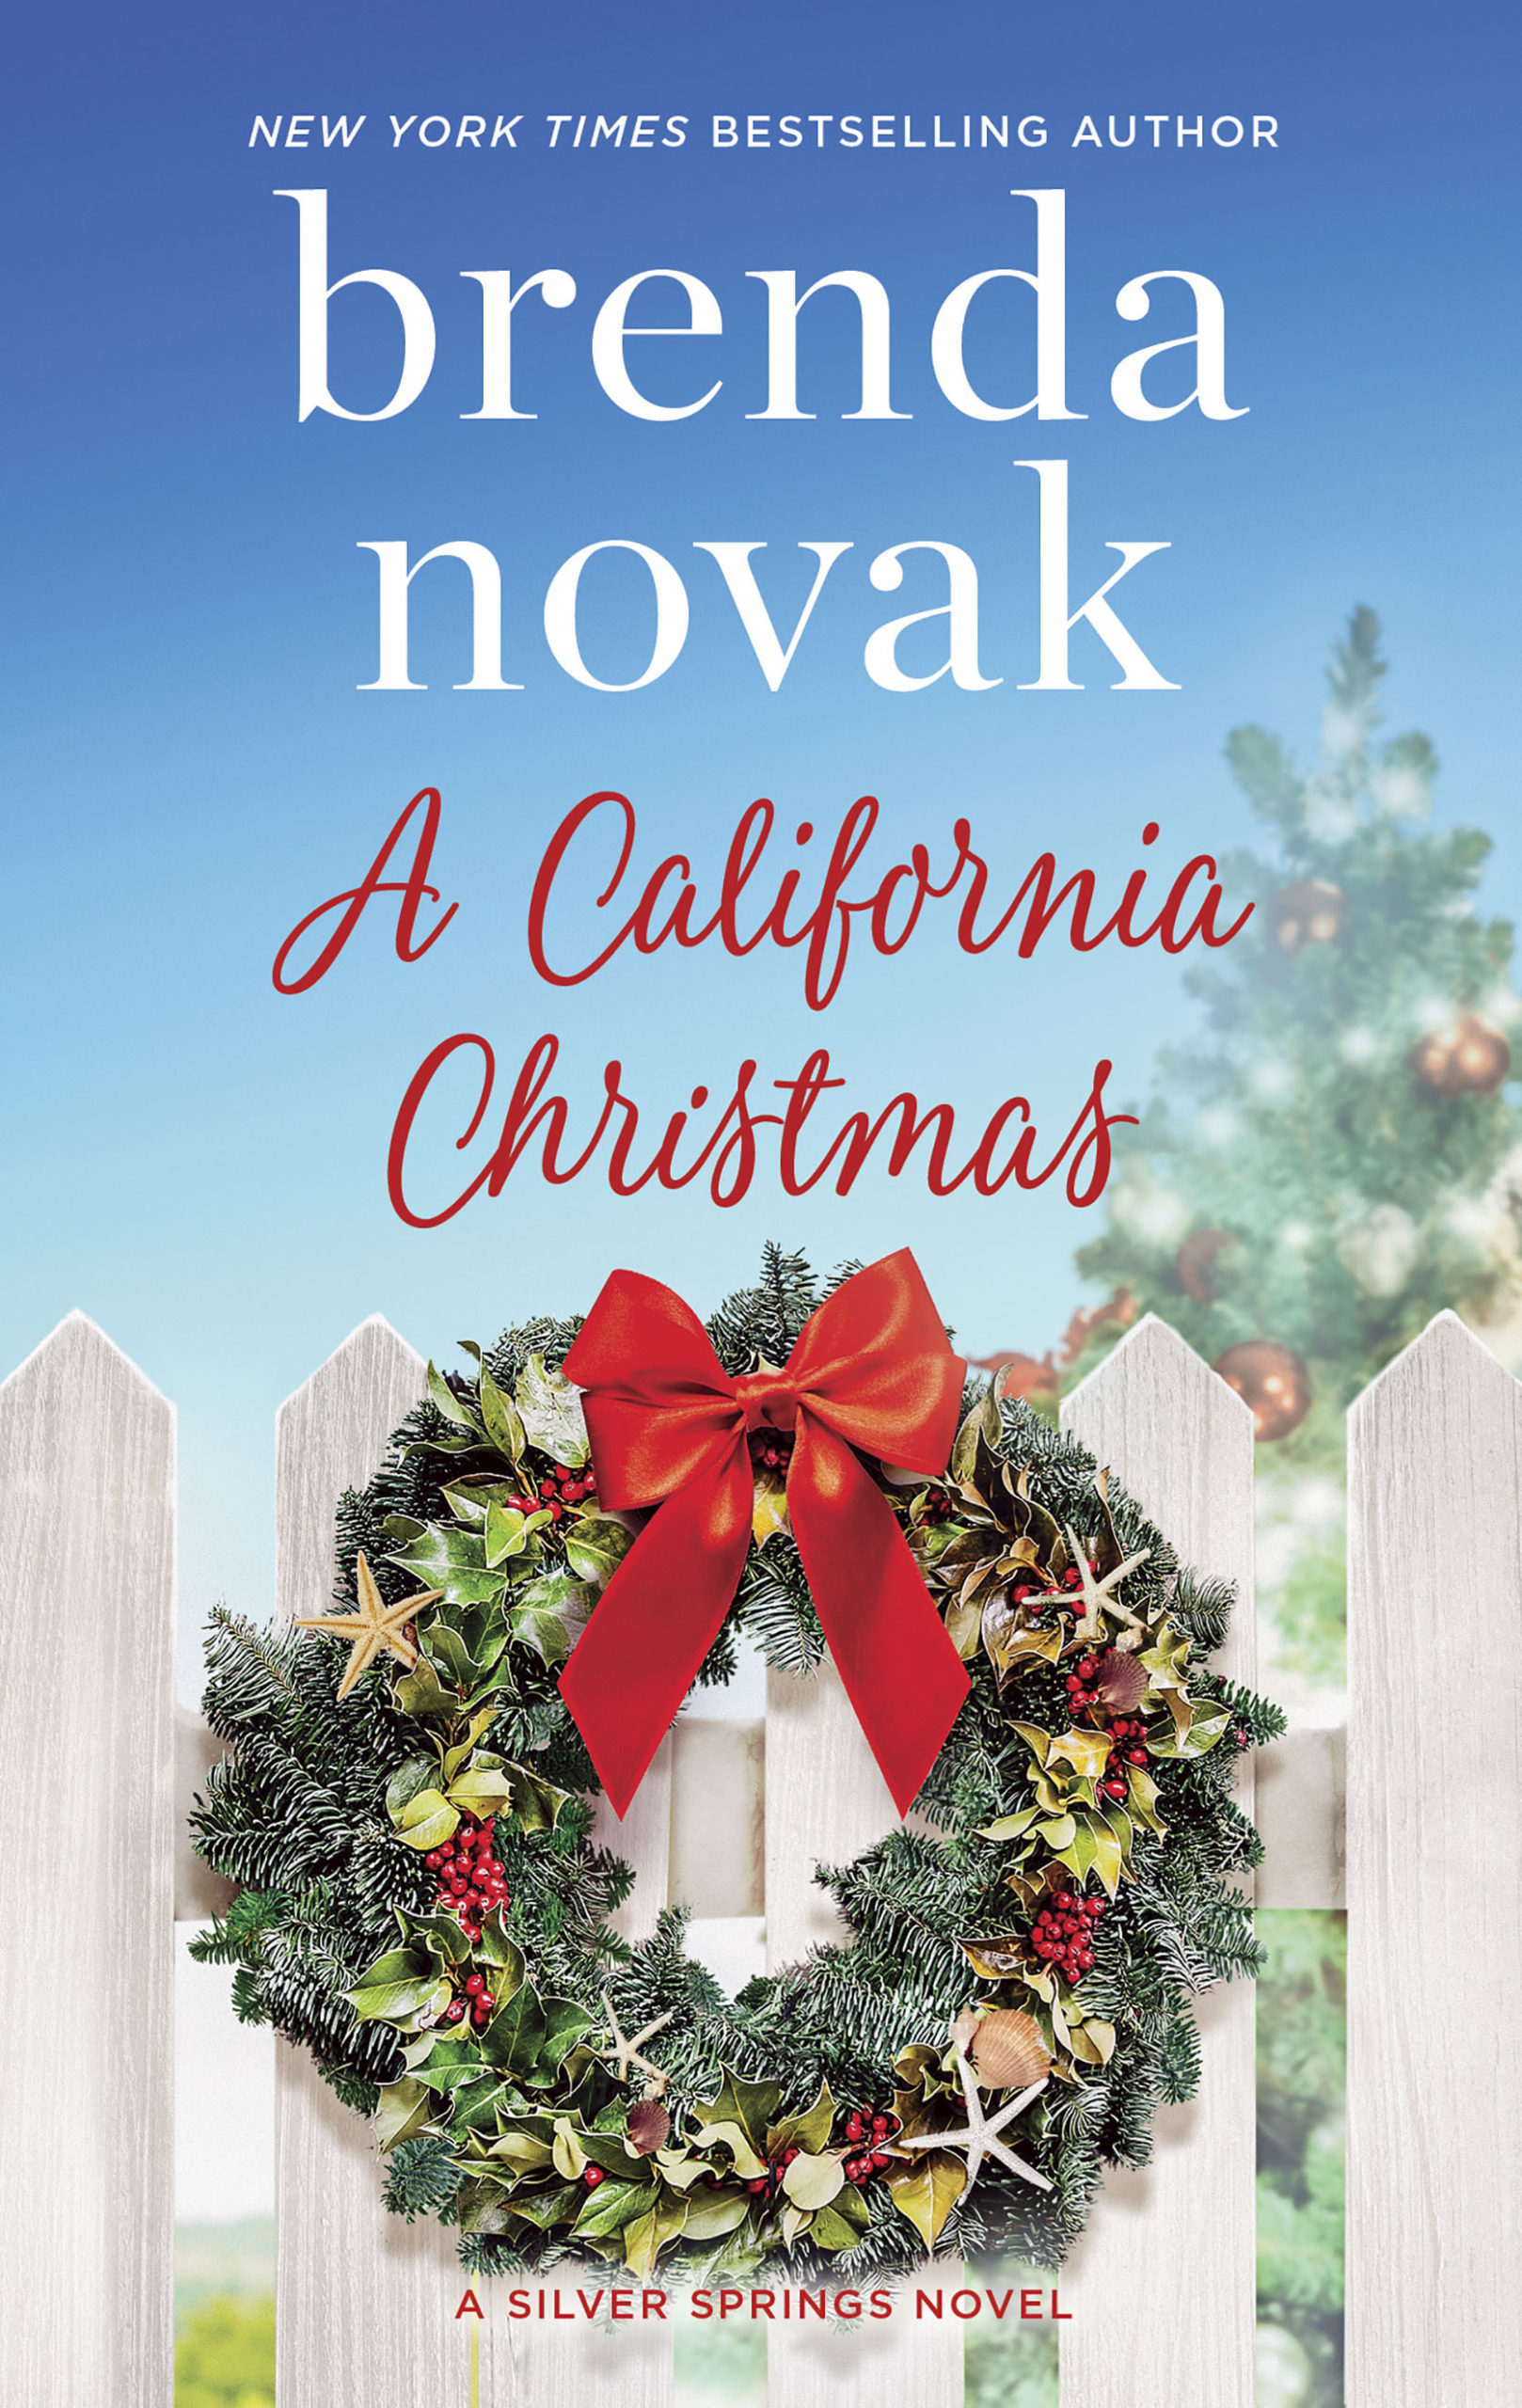 A California Christmas Brenda Novak image picture